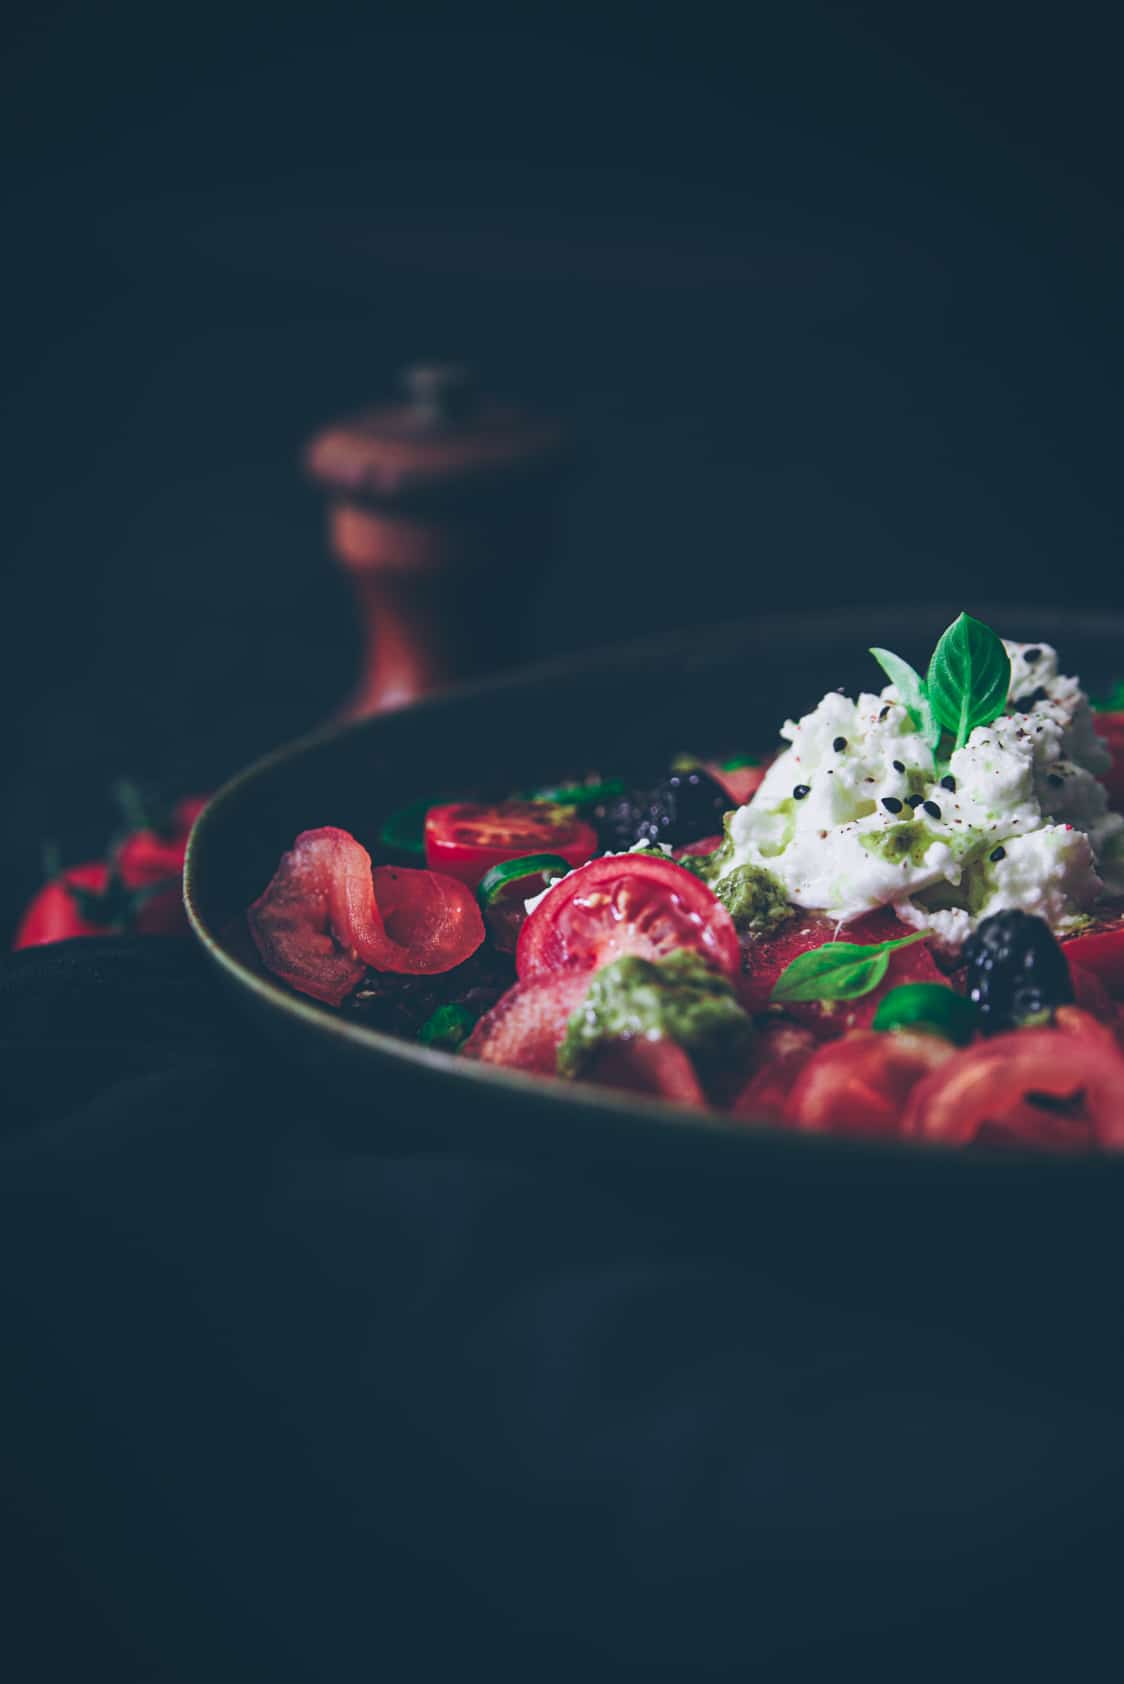 black rice salad photography and recipes - confitbanane